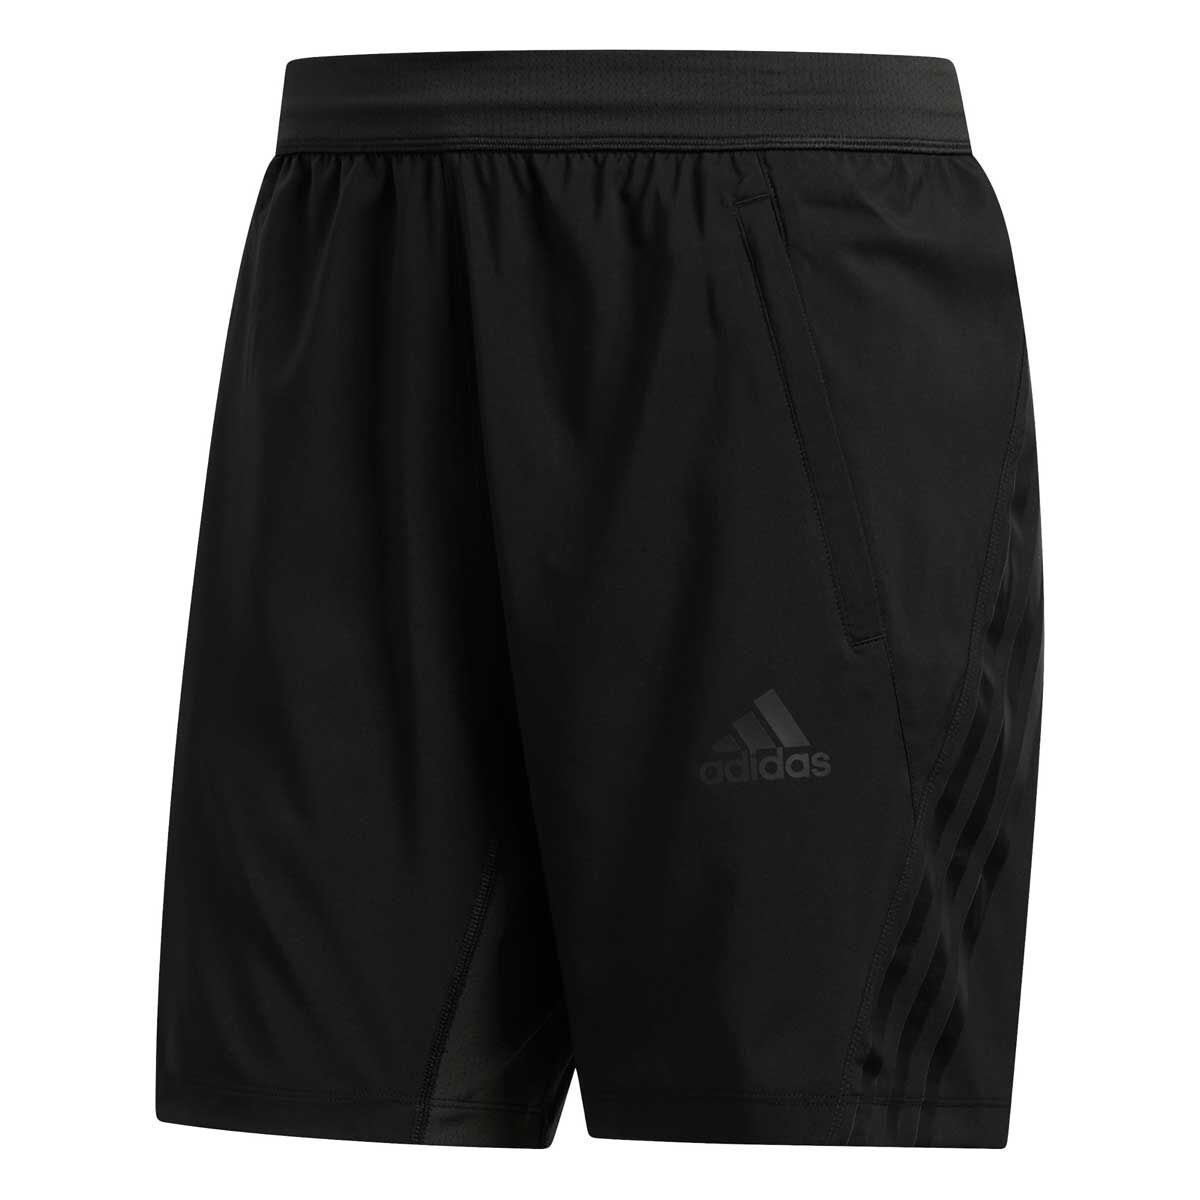 adidas 3 stripe training shorts mens